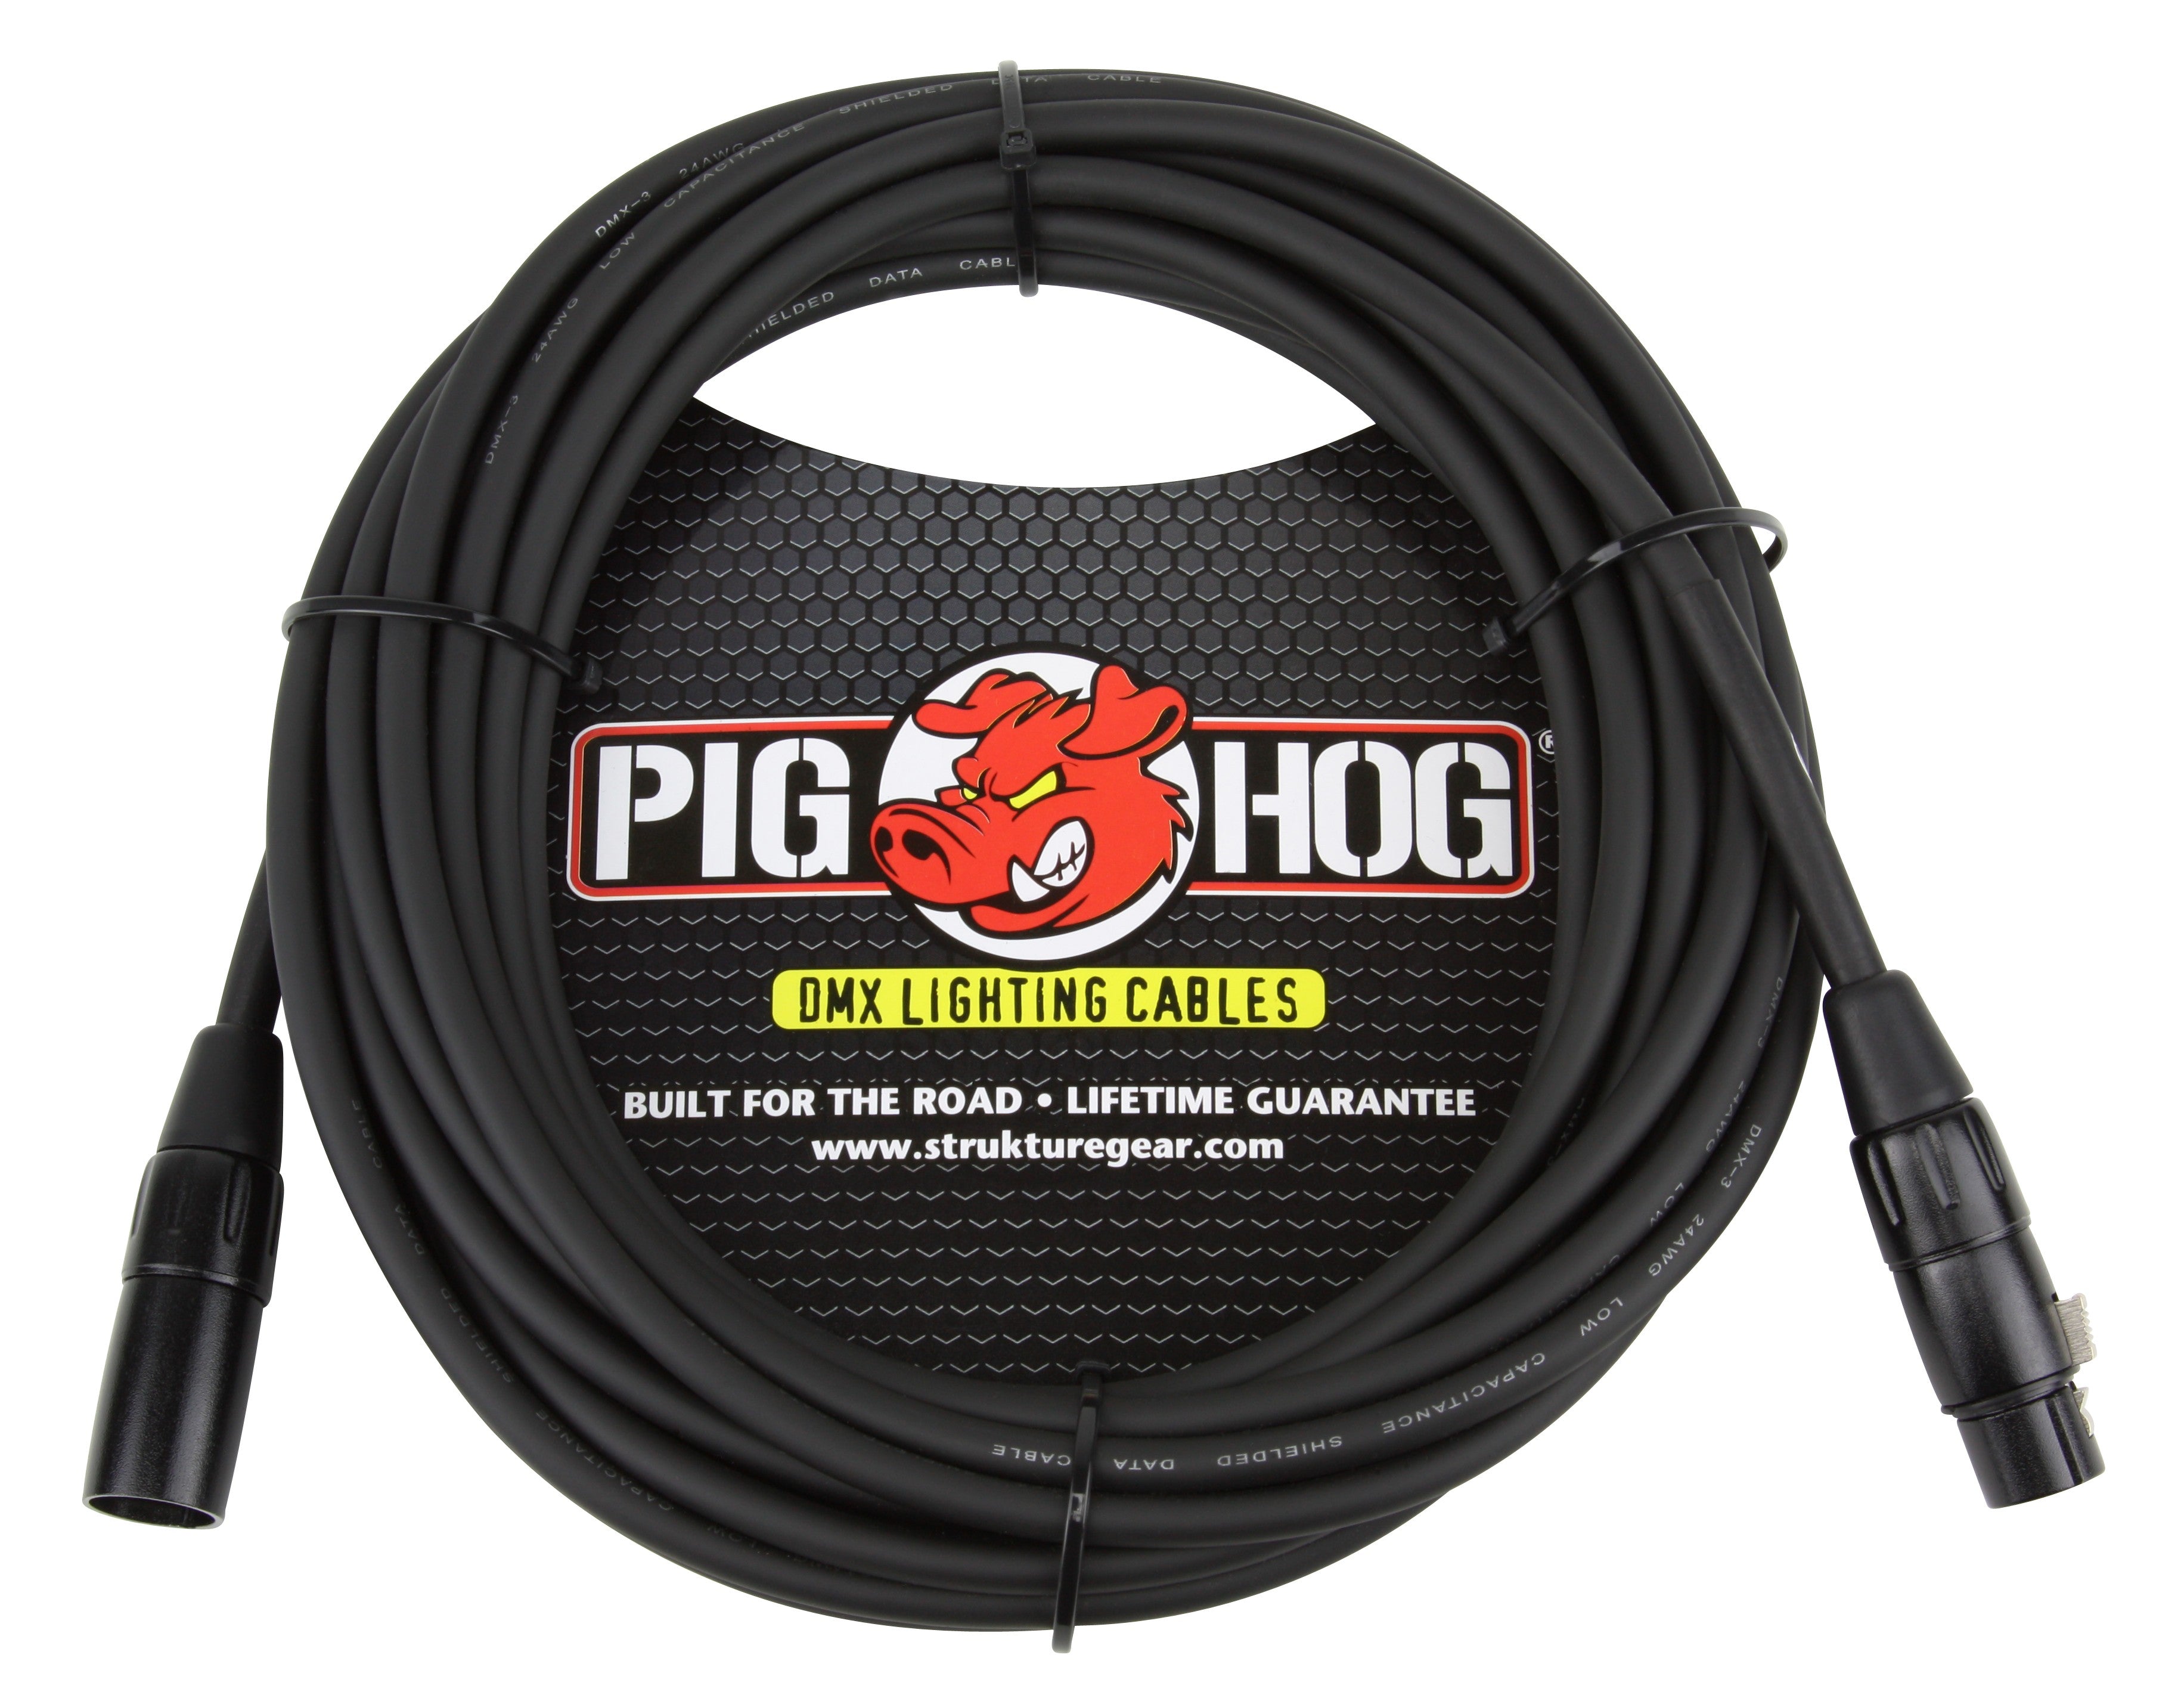 Pig Hog 25ft DMX Lighting